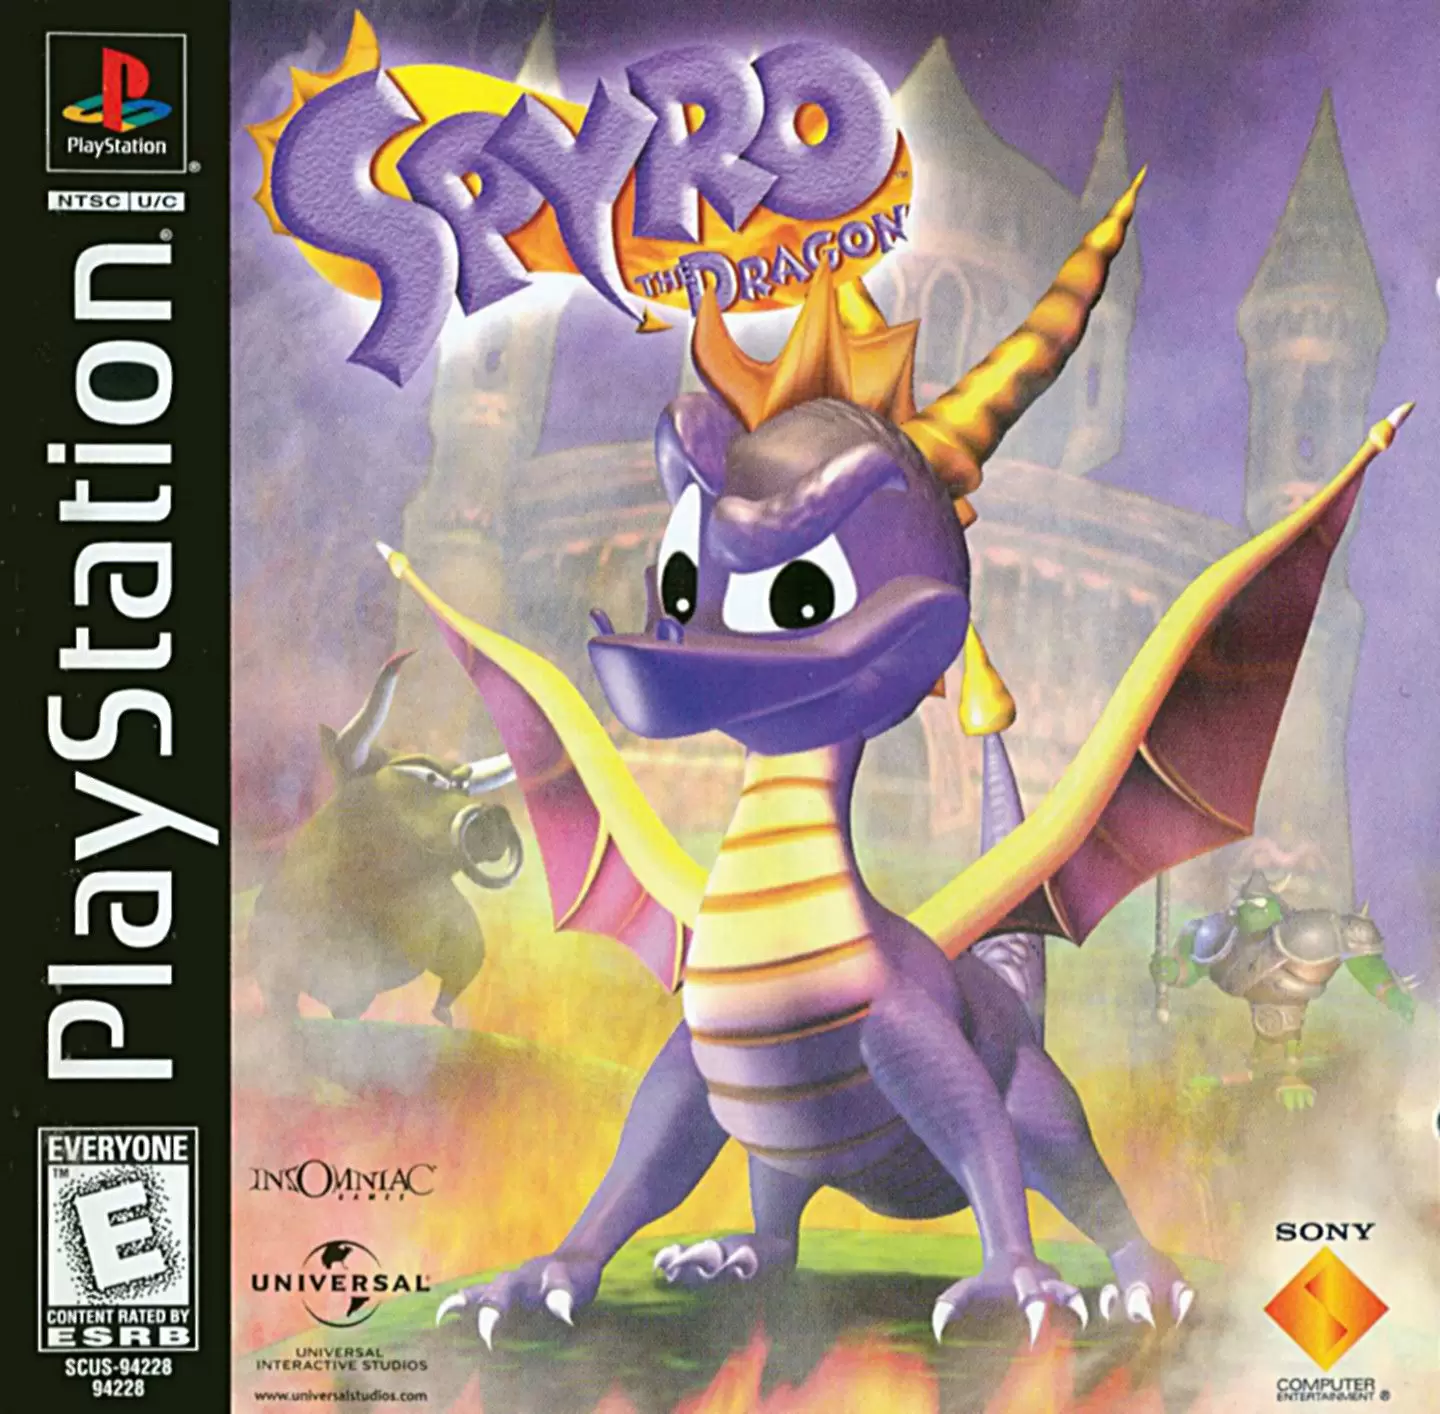 Playstation games - Spyro the Dragon